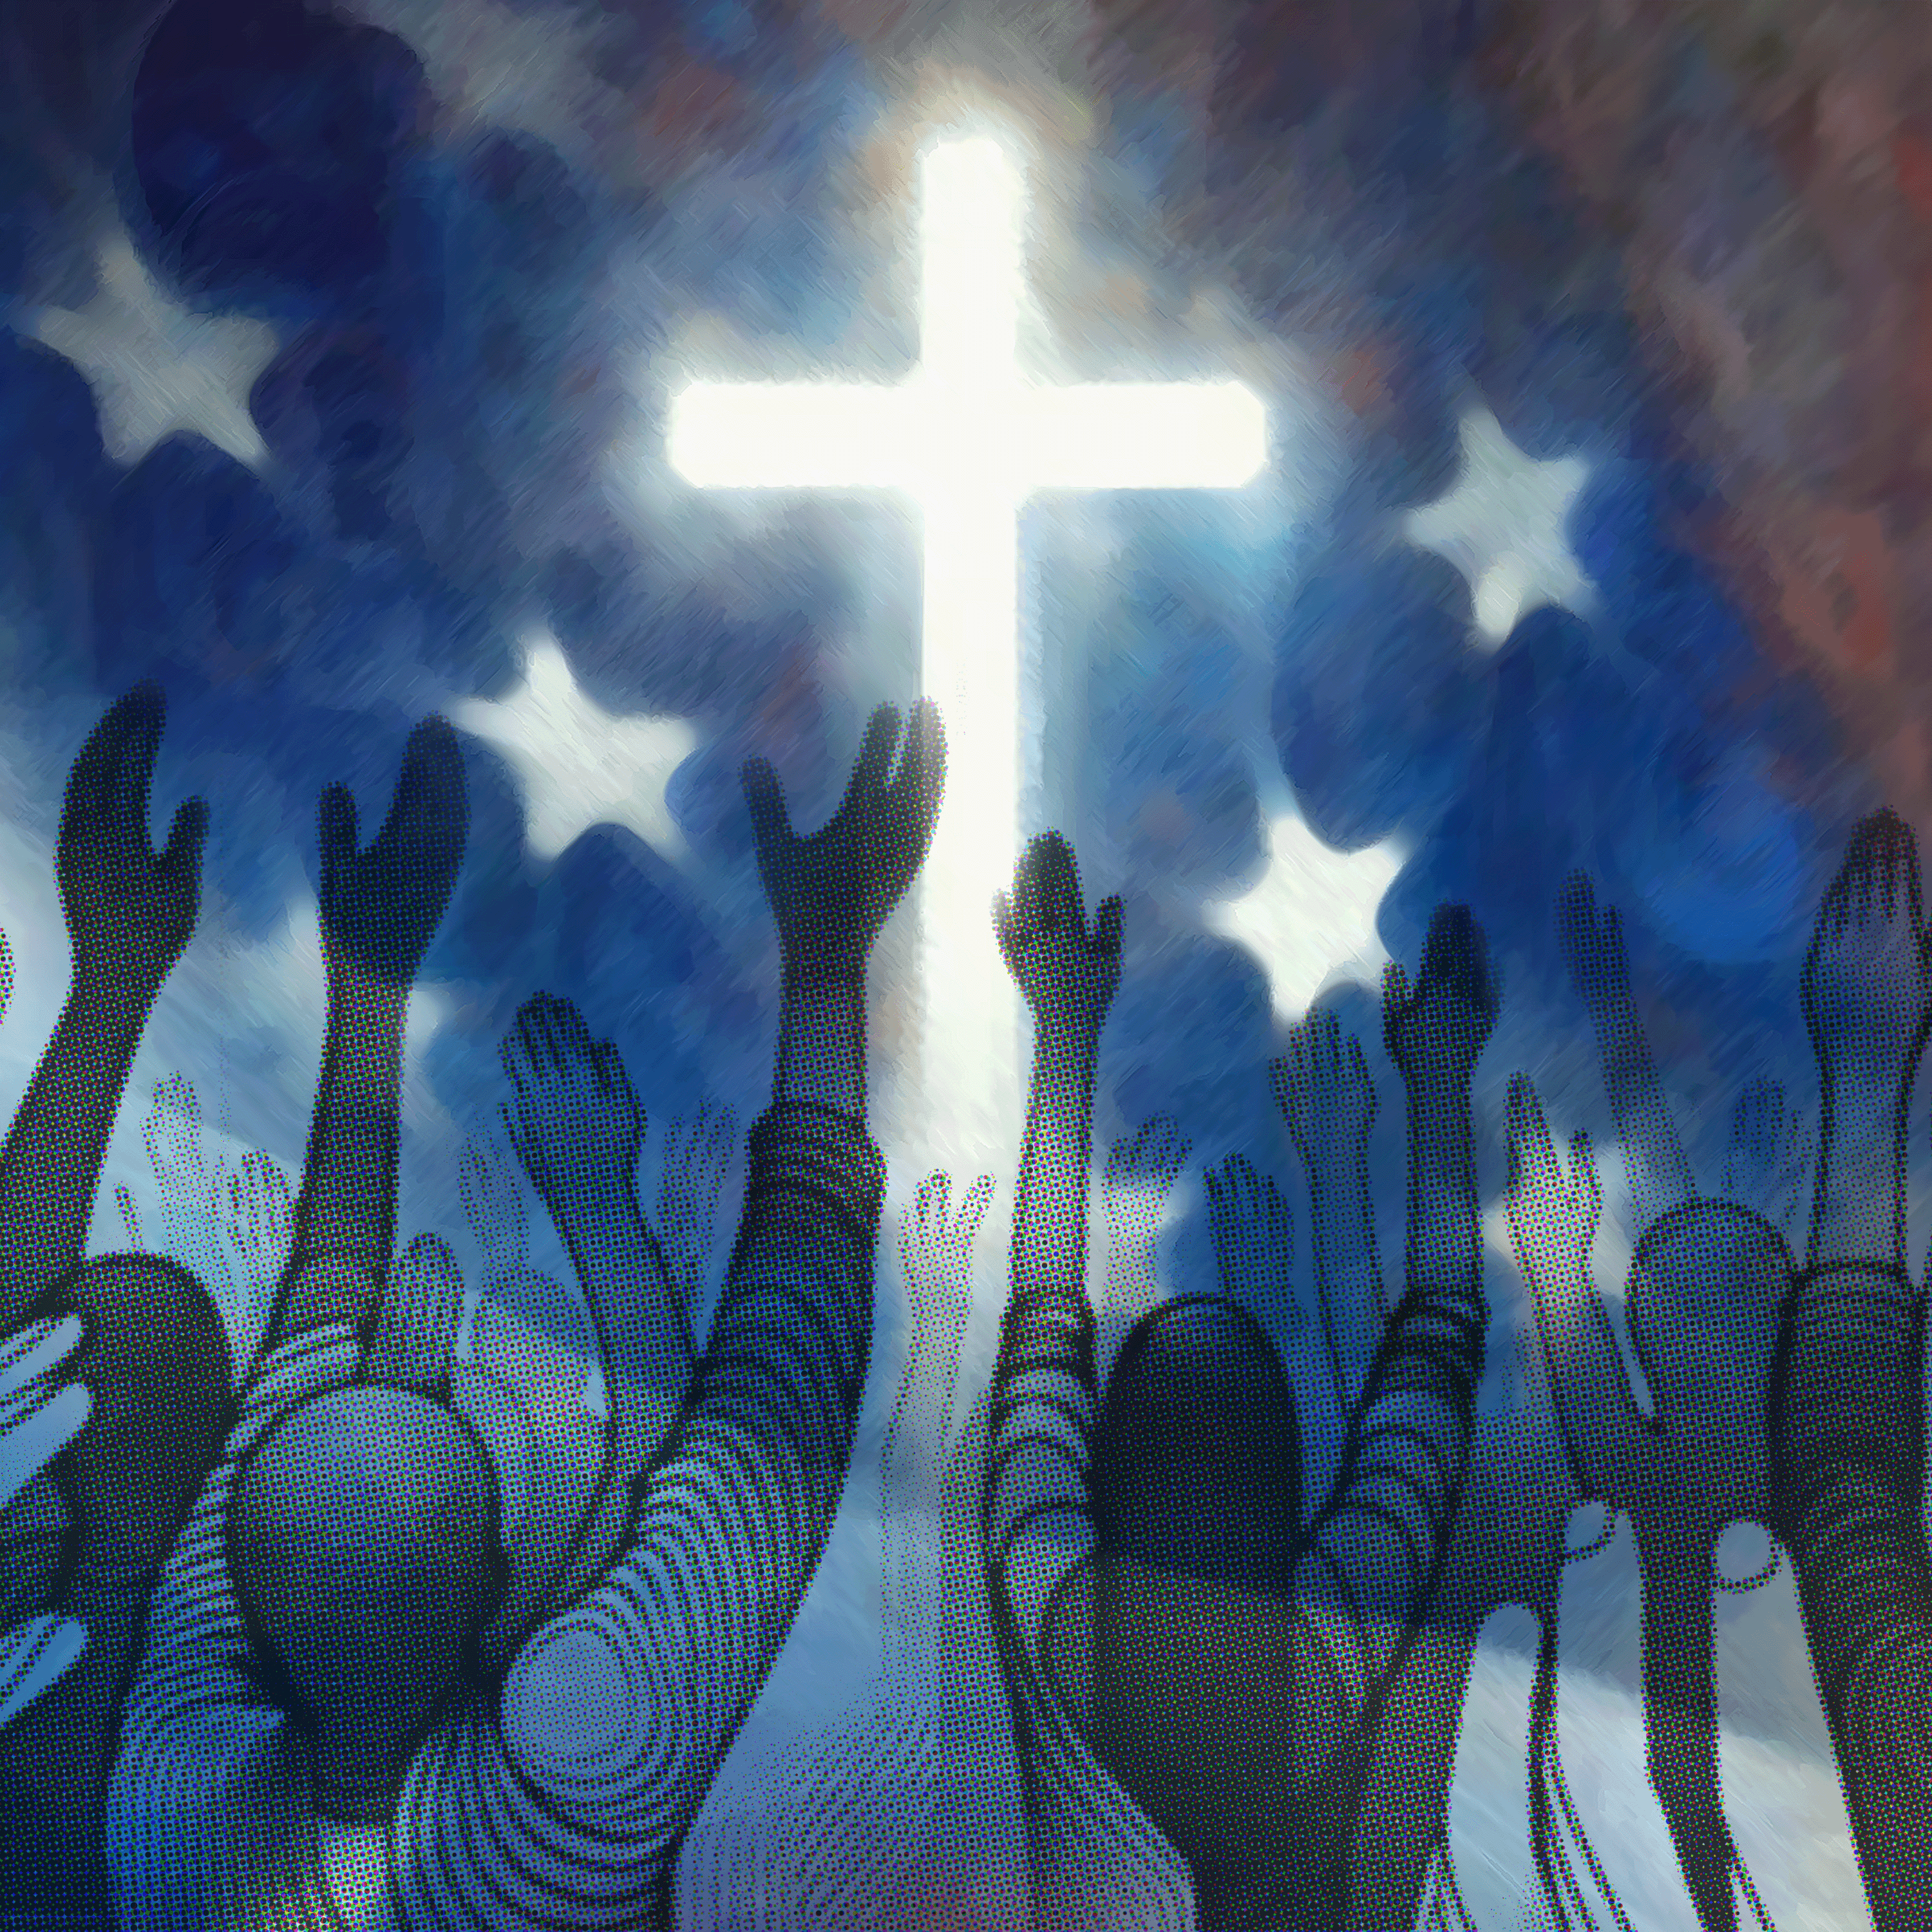 Thumbnail for "One Nation Under God?".